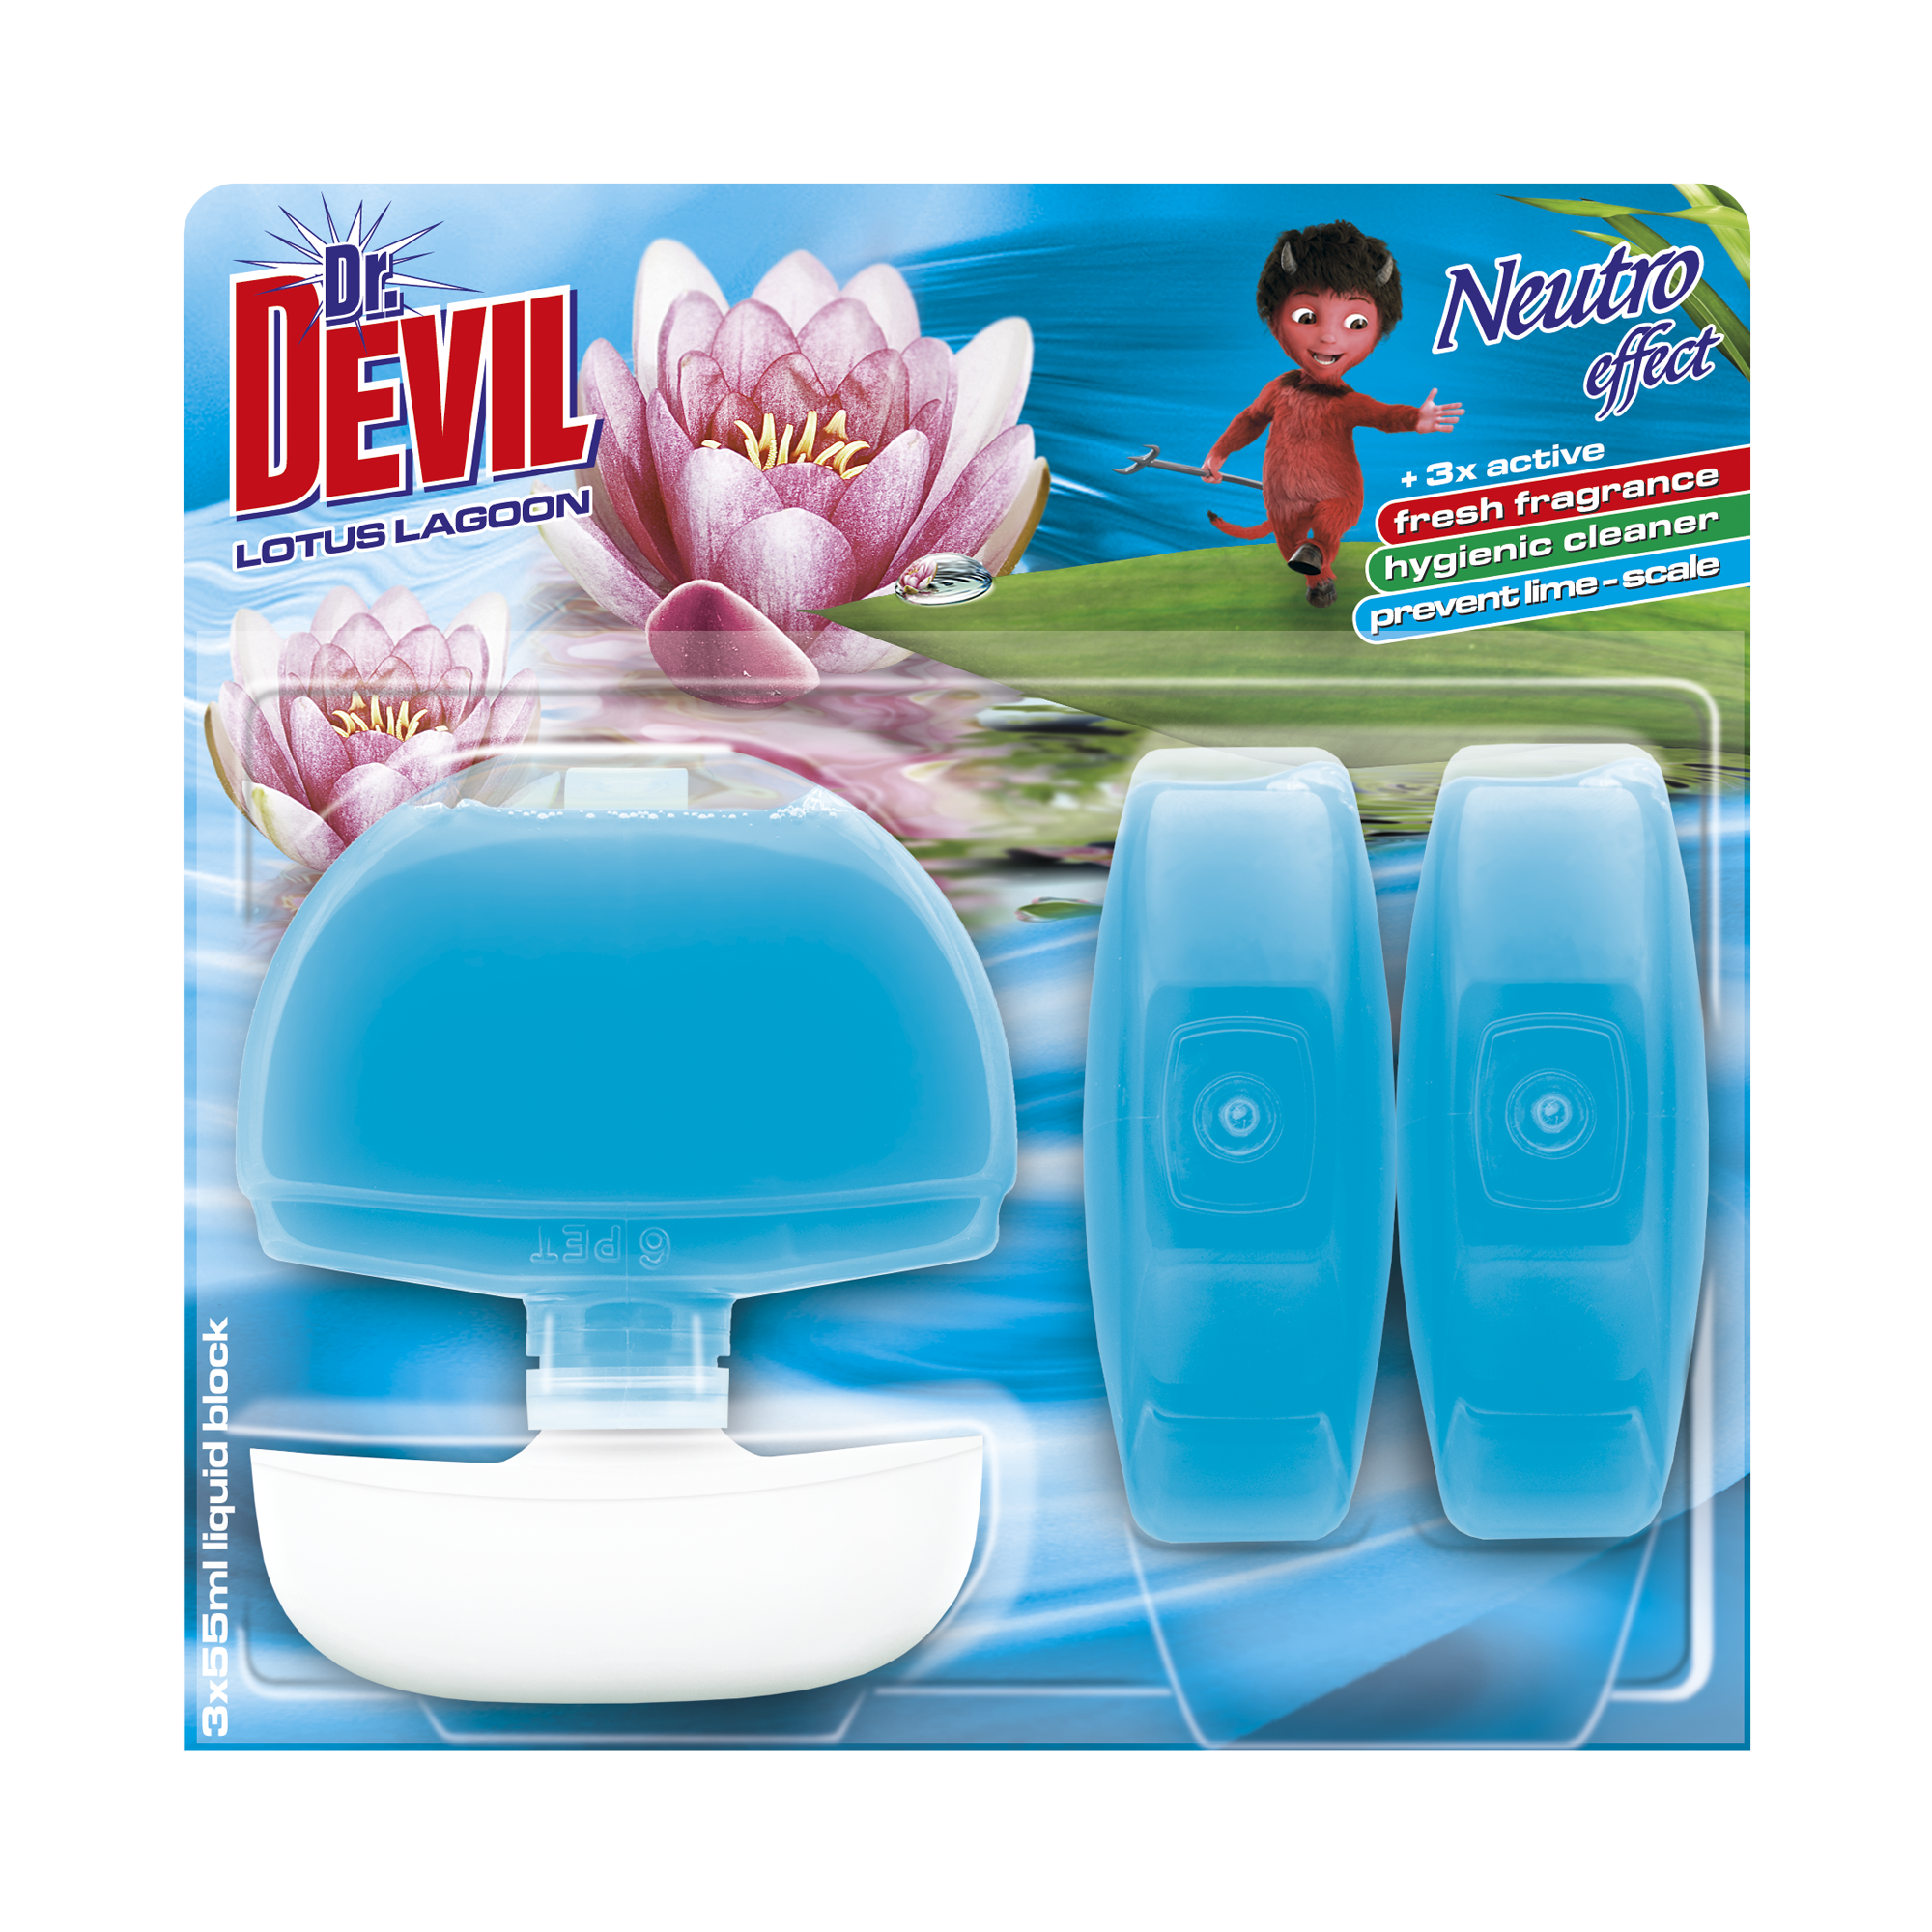 Dr. Devil WC-Flüssigspüler Neutro Effect Lotus Lagoon